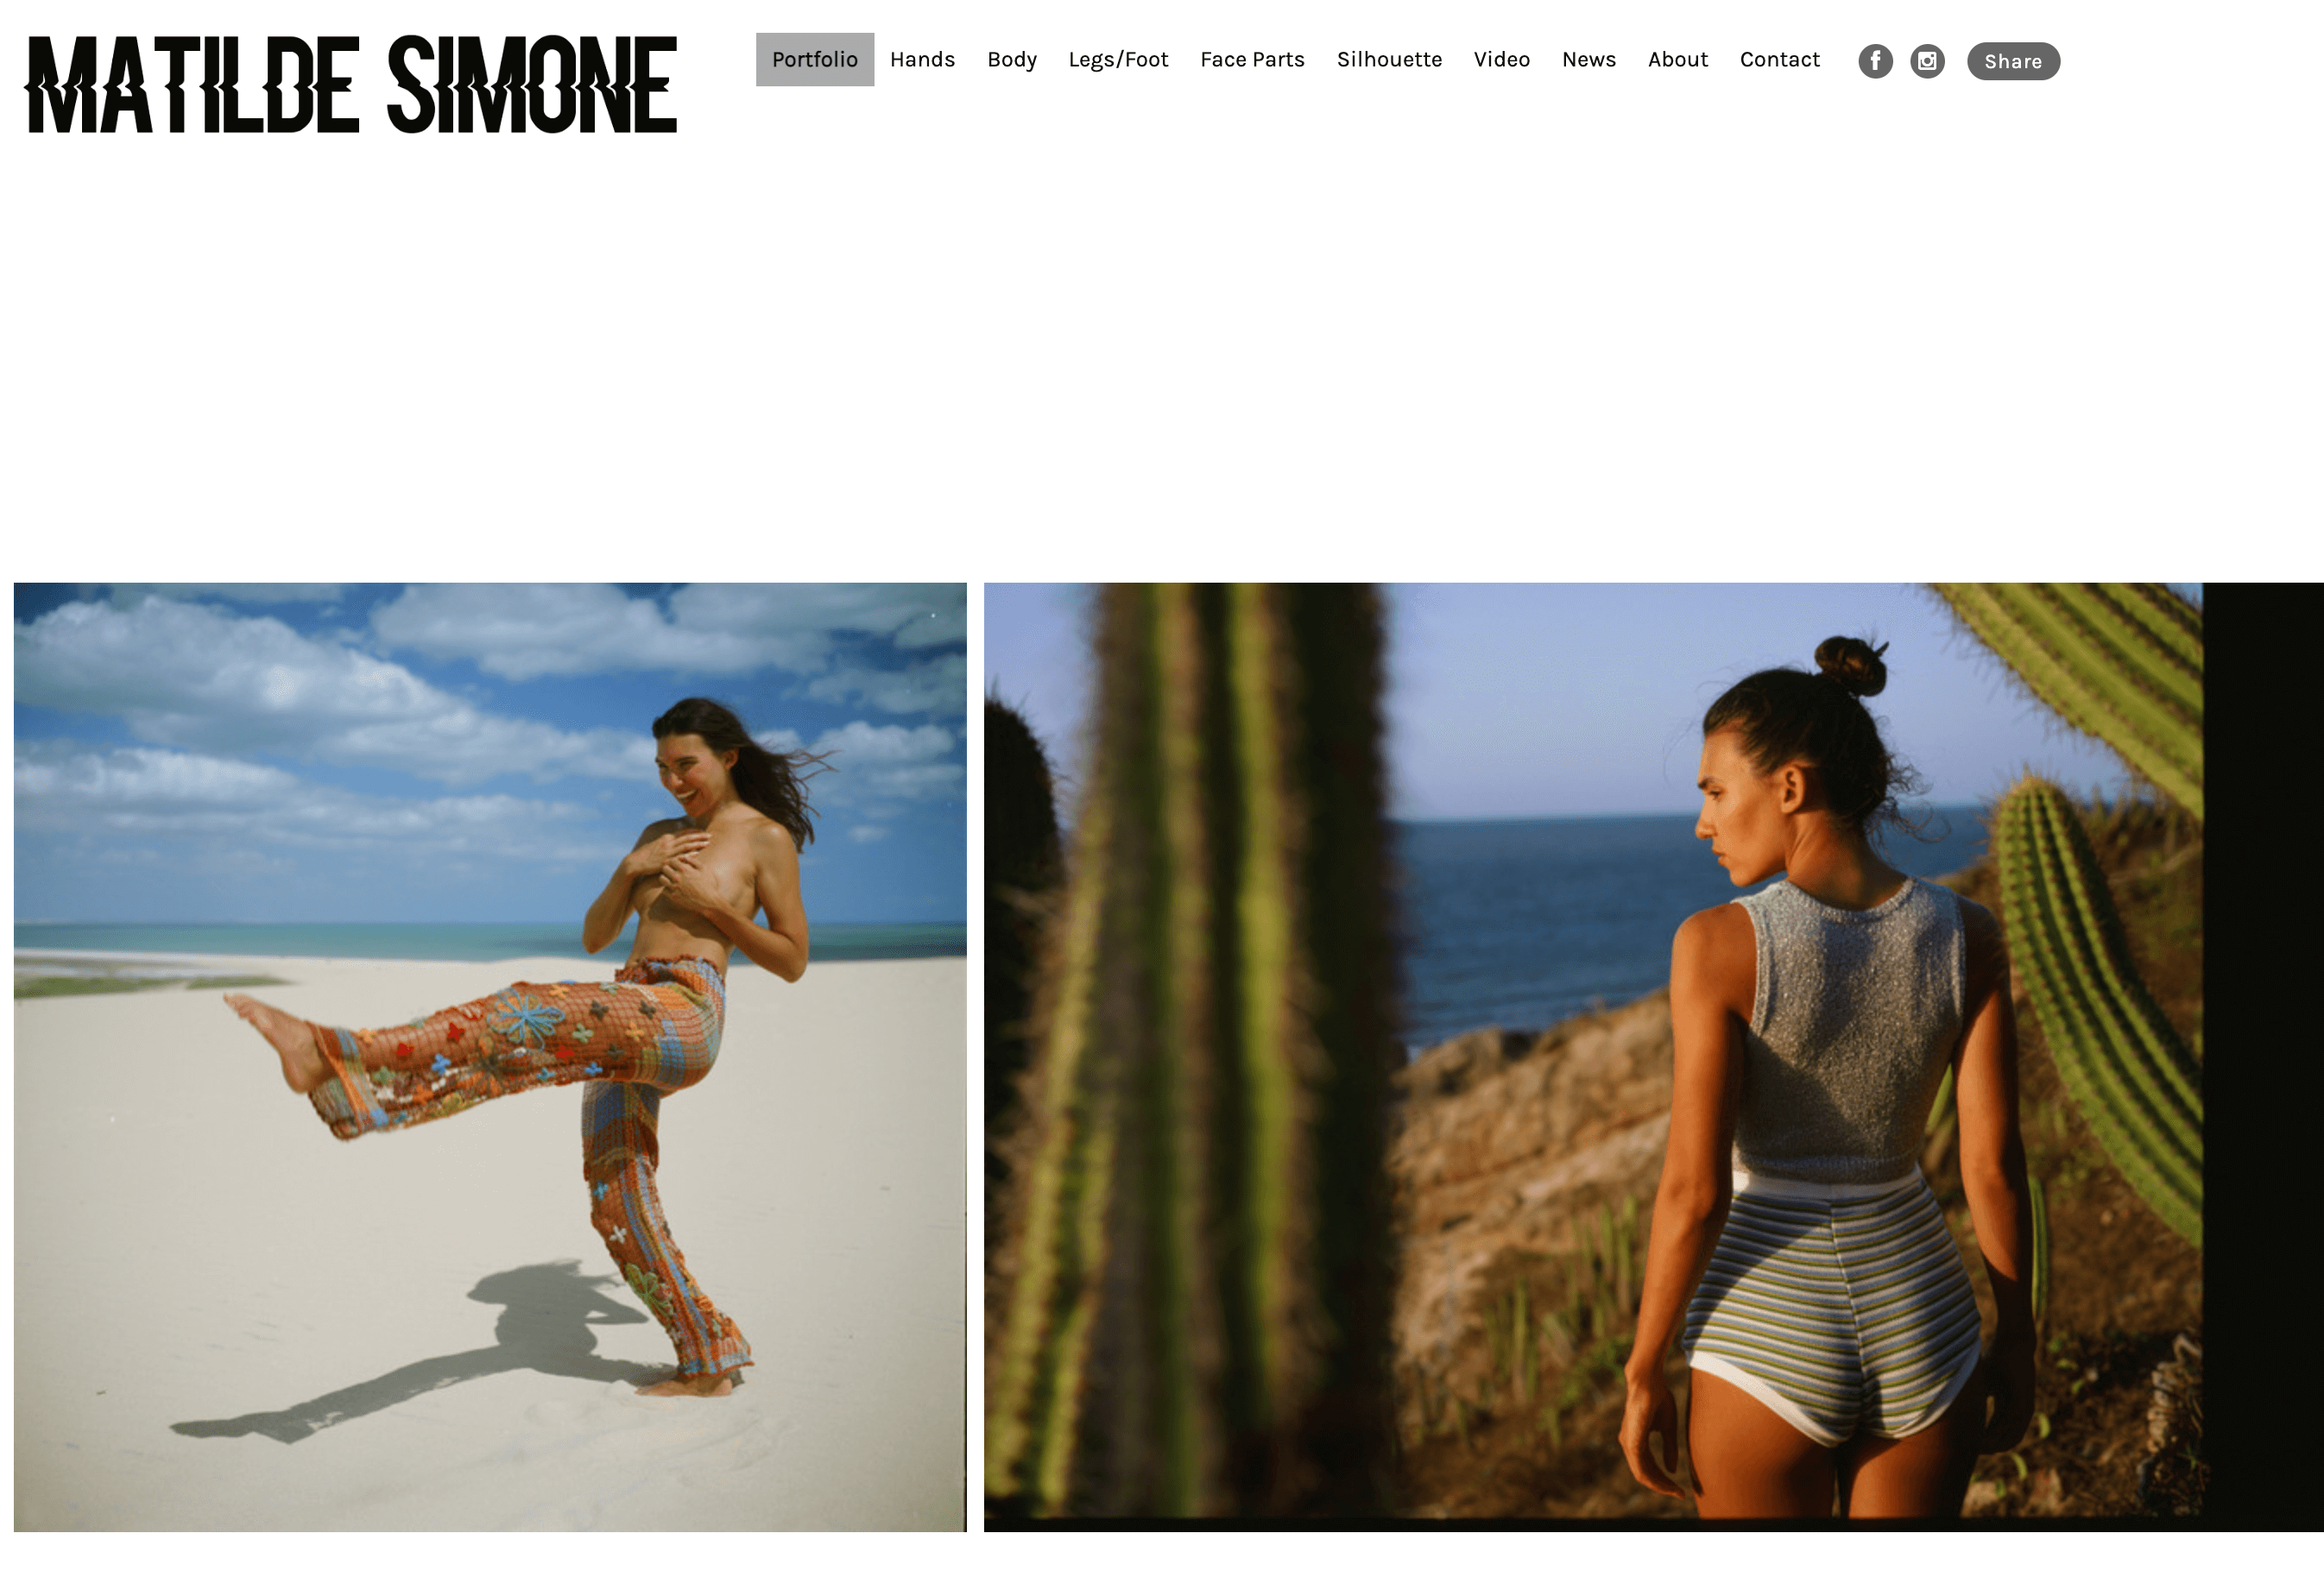 Matilde Simone's homepage